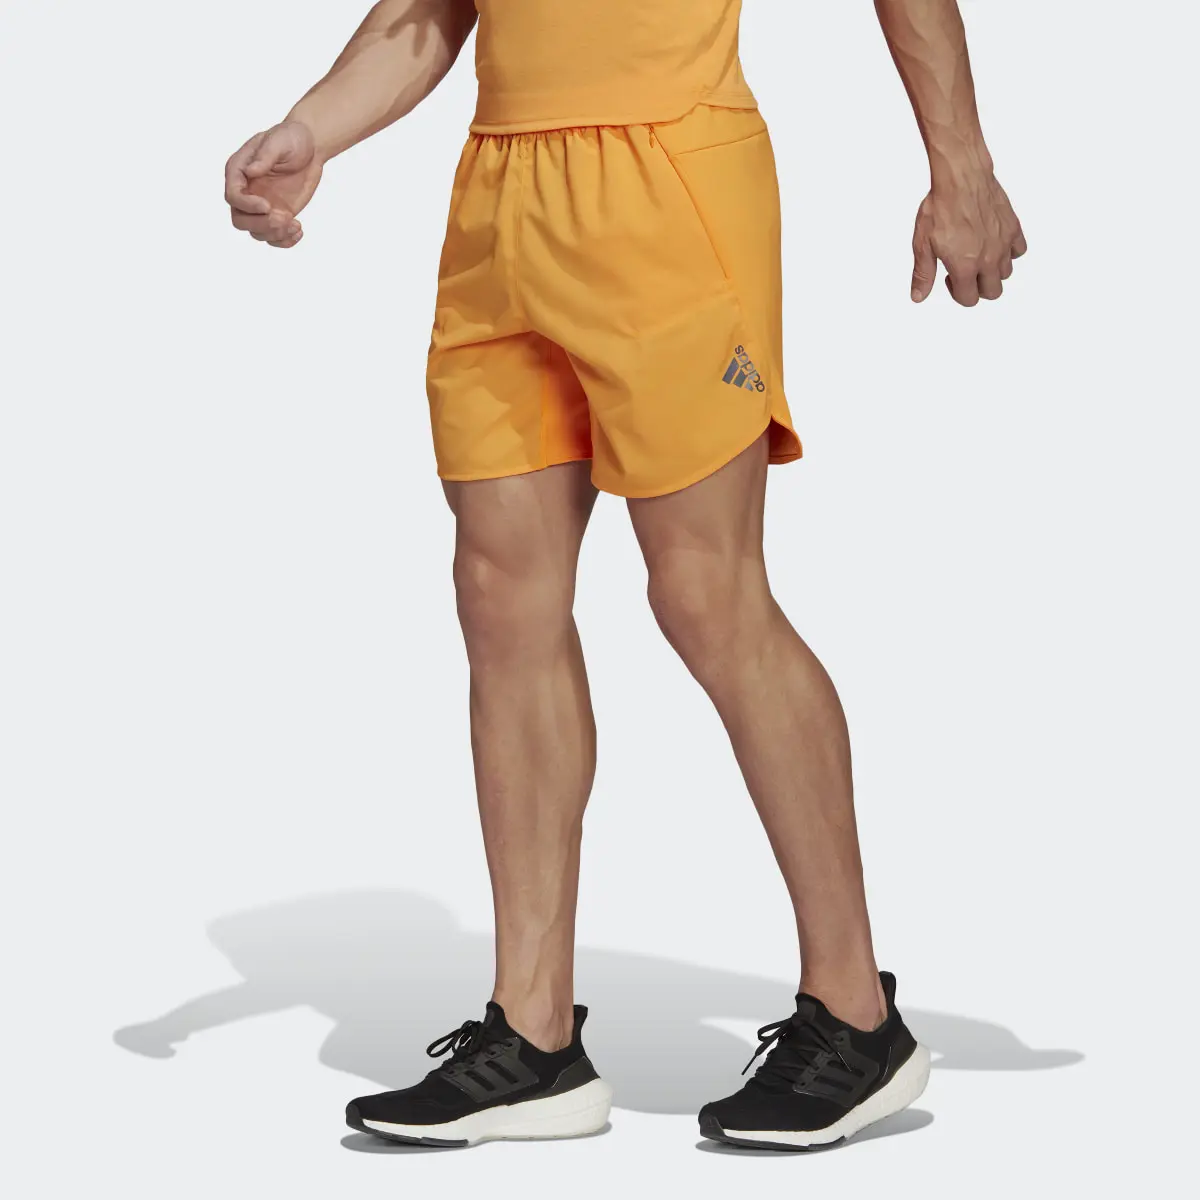 Adidas Short Designed for Training. 1